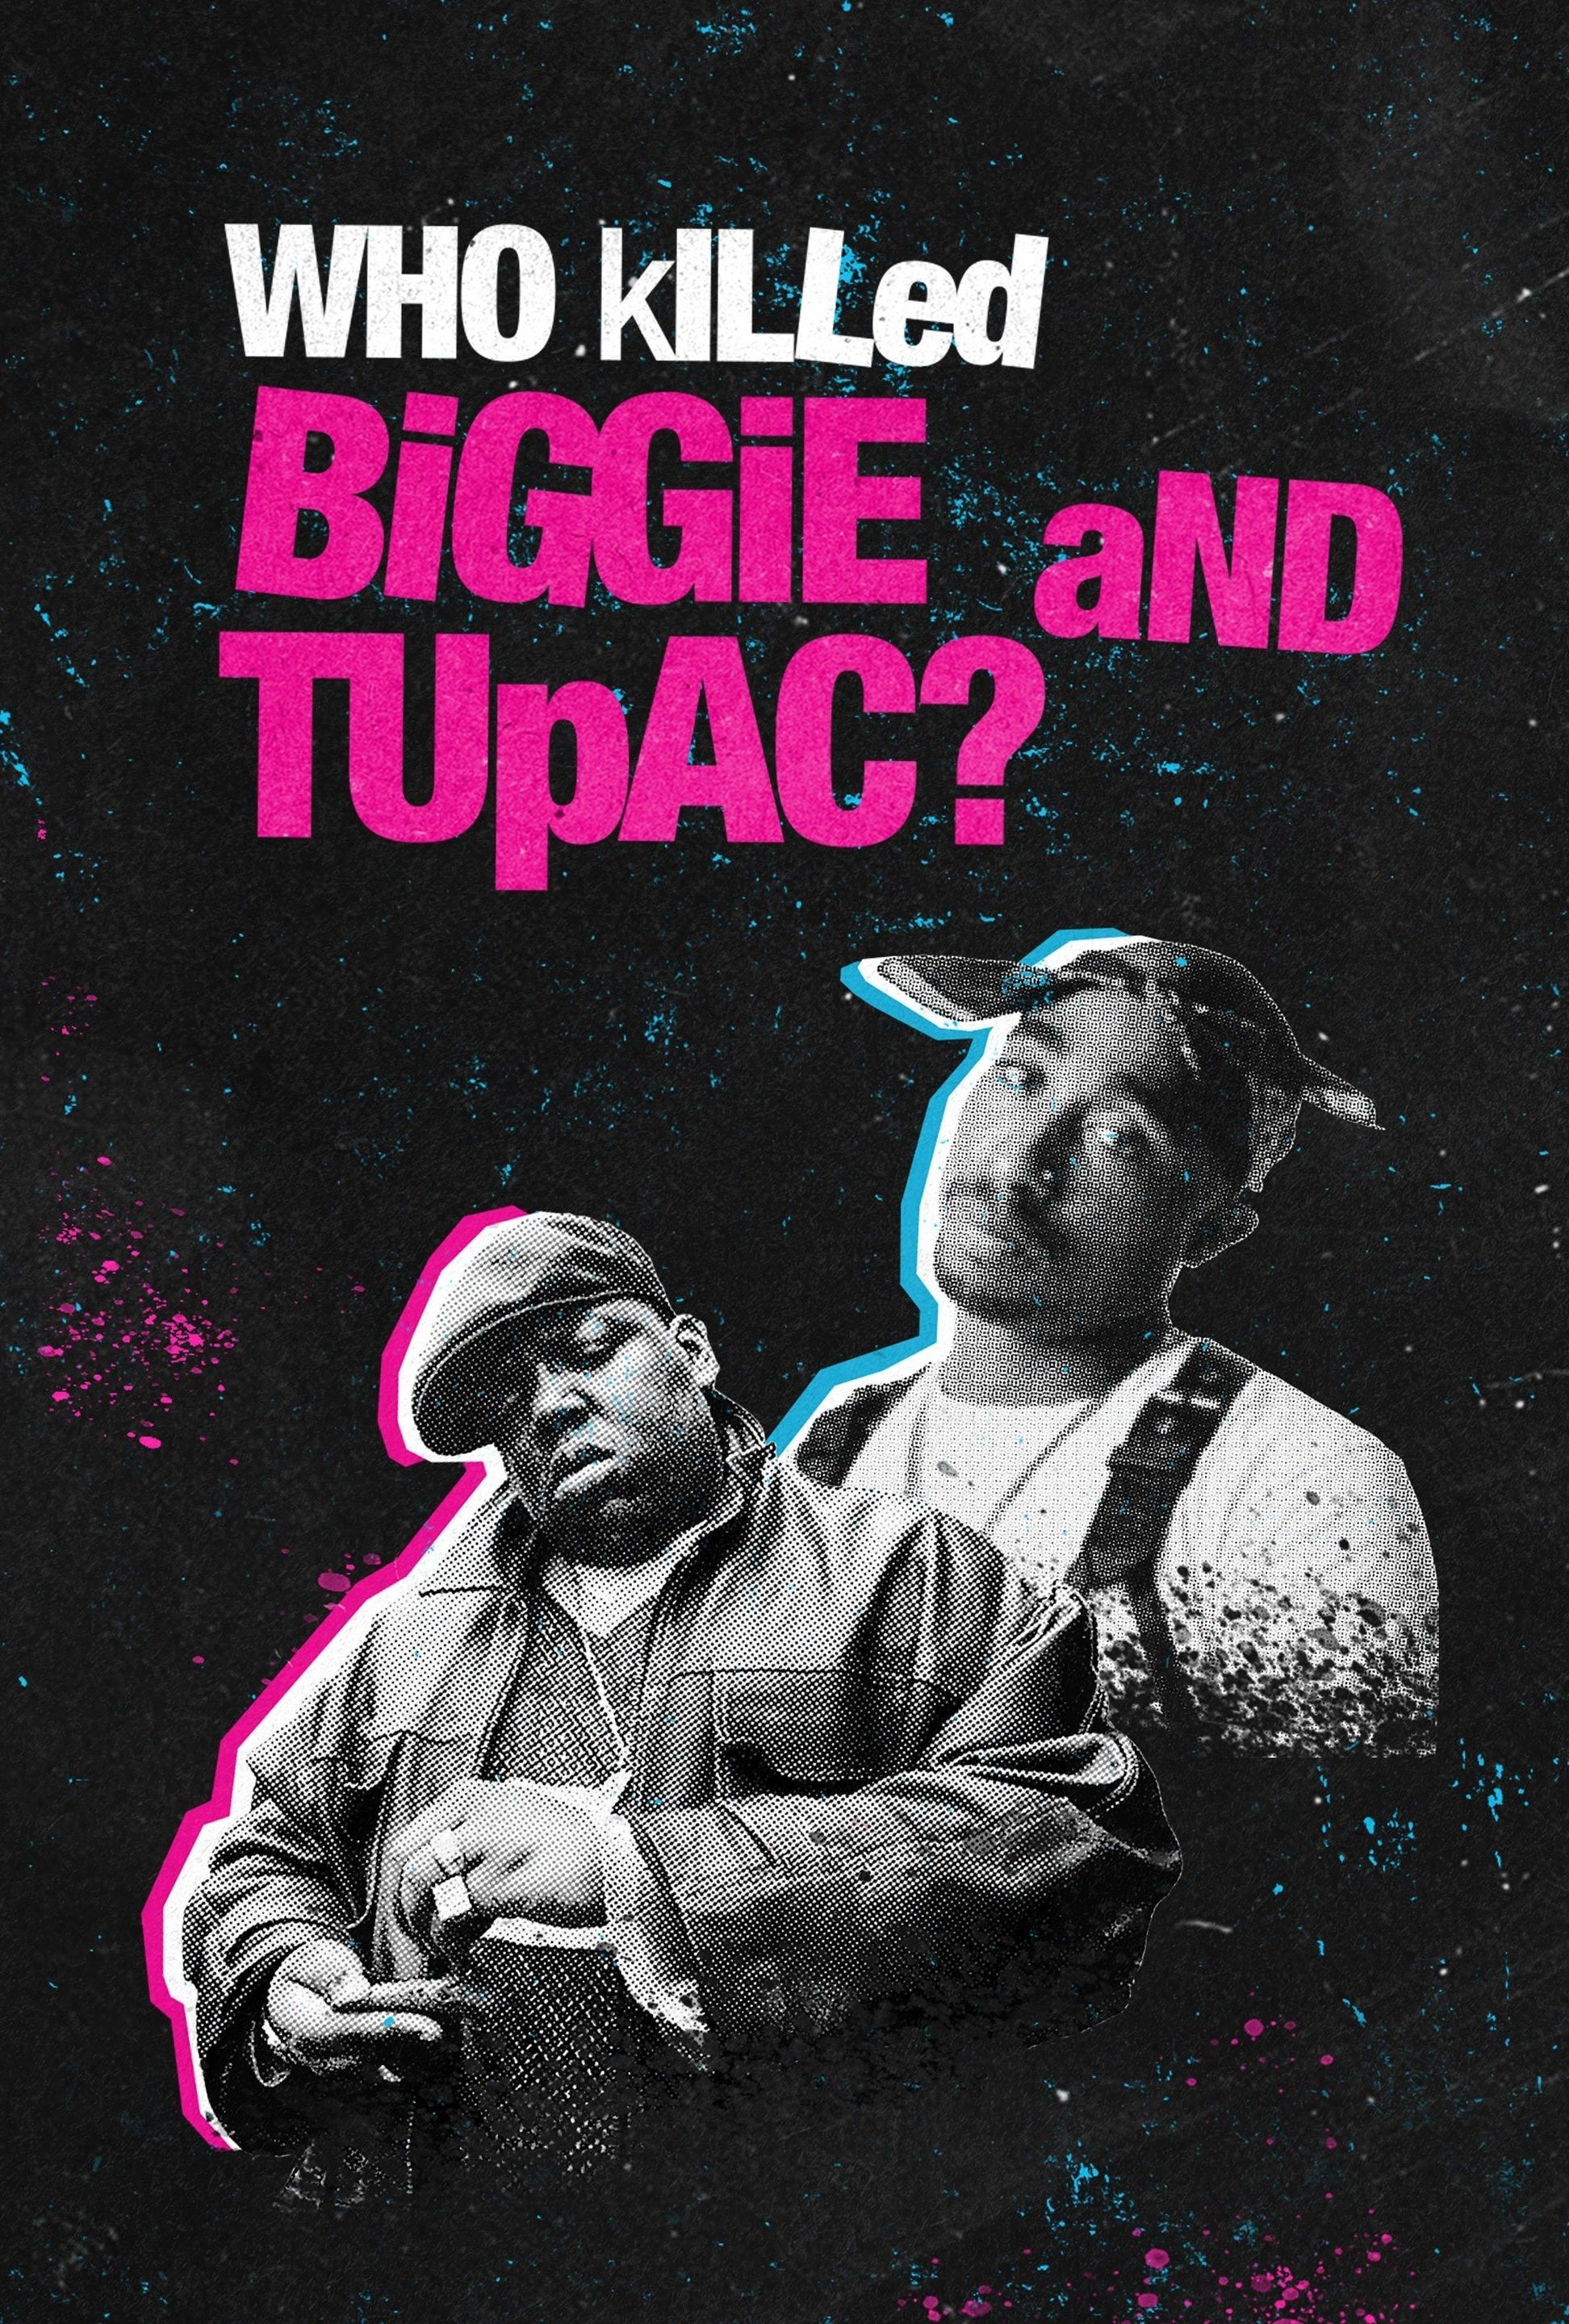 Quem matou Biggie e Tupac? - SAPO Mag